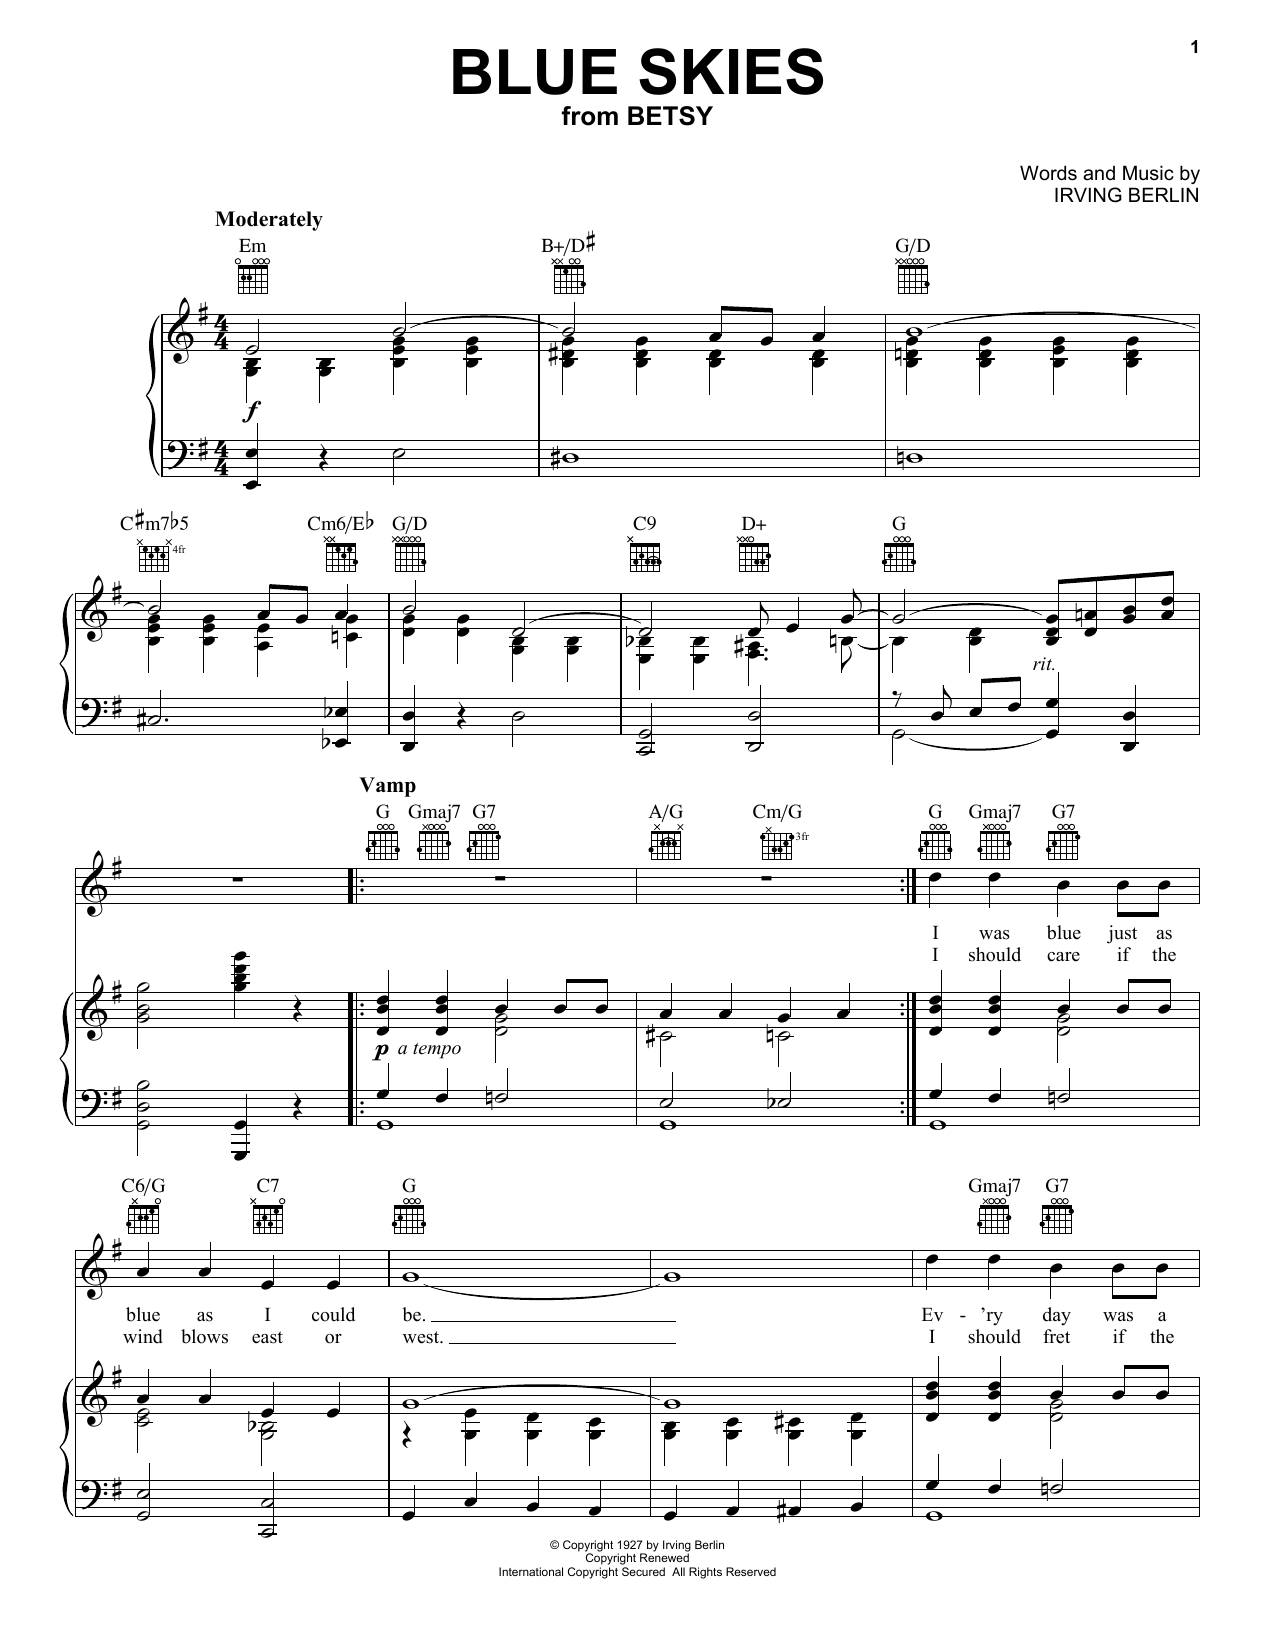 Irving Berlin Blue Skies Sheet Music Notes & Chords for Ukulele - Download or Print PDF